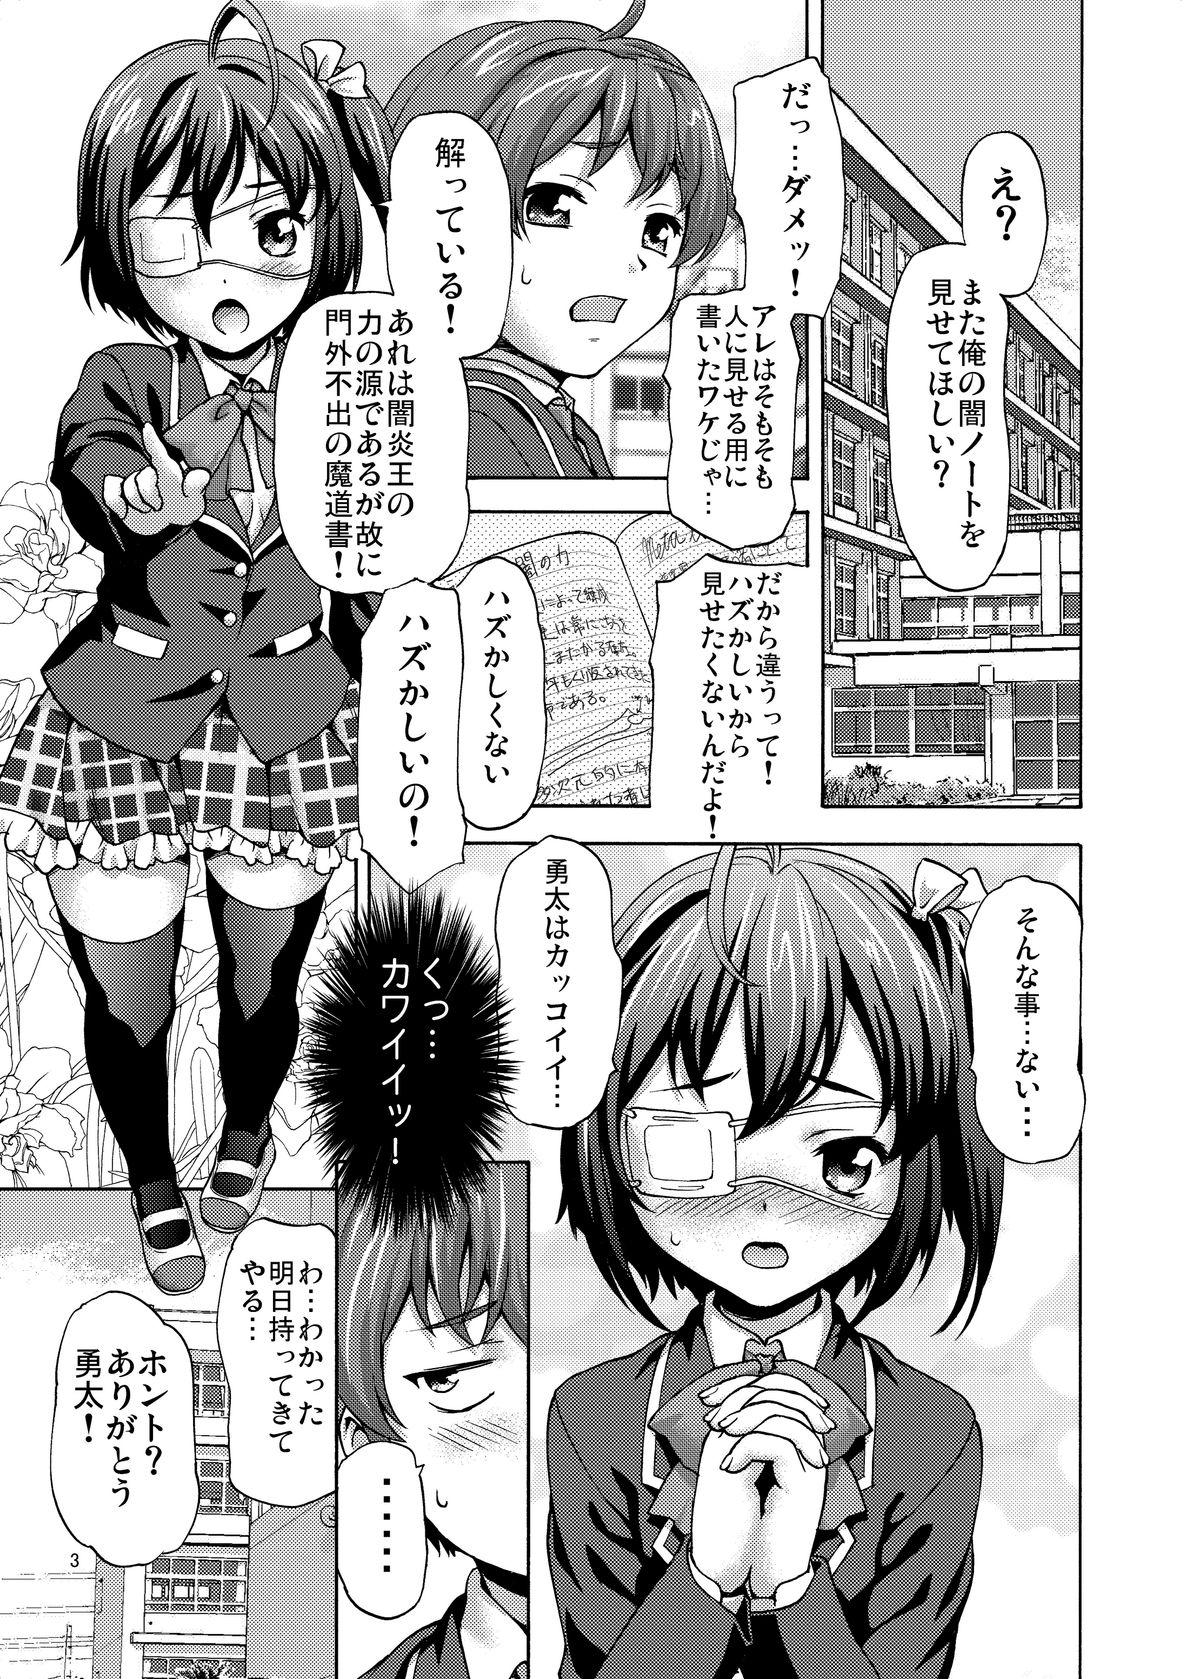 Female Lovely Siesta - Chuunibyou demo koi ga shitai Highheels - Page 3